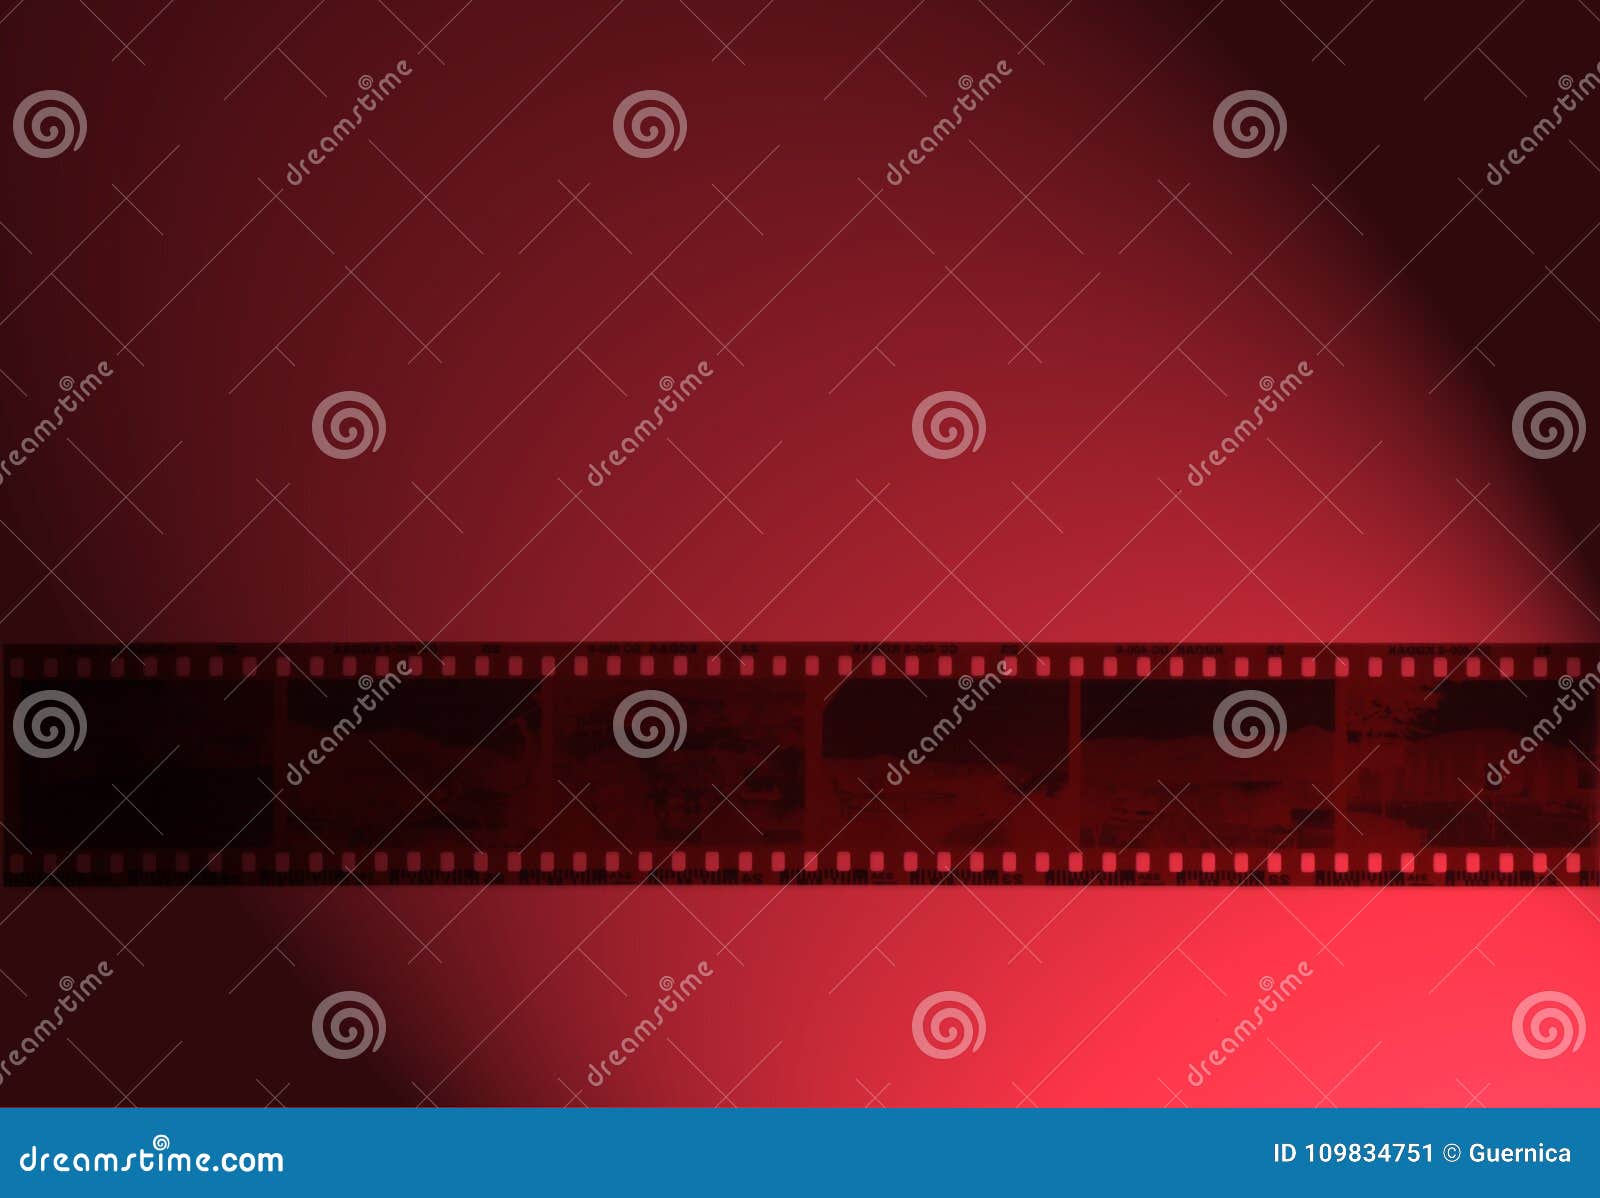 35mm Movie Film in Red Light Red Light Reel of Film Stock